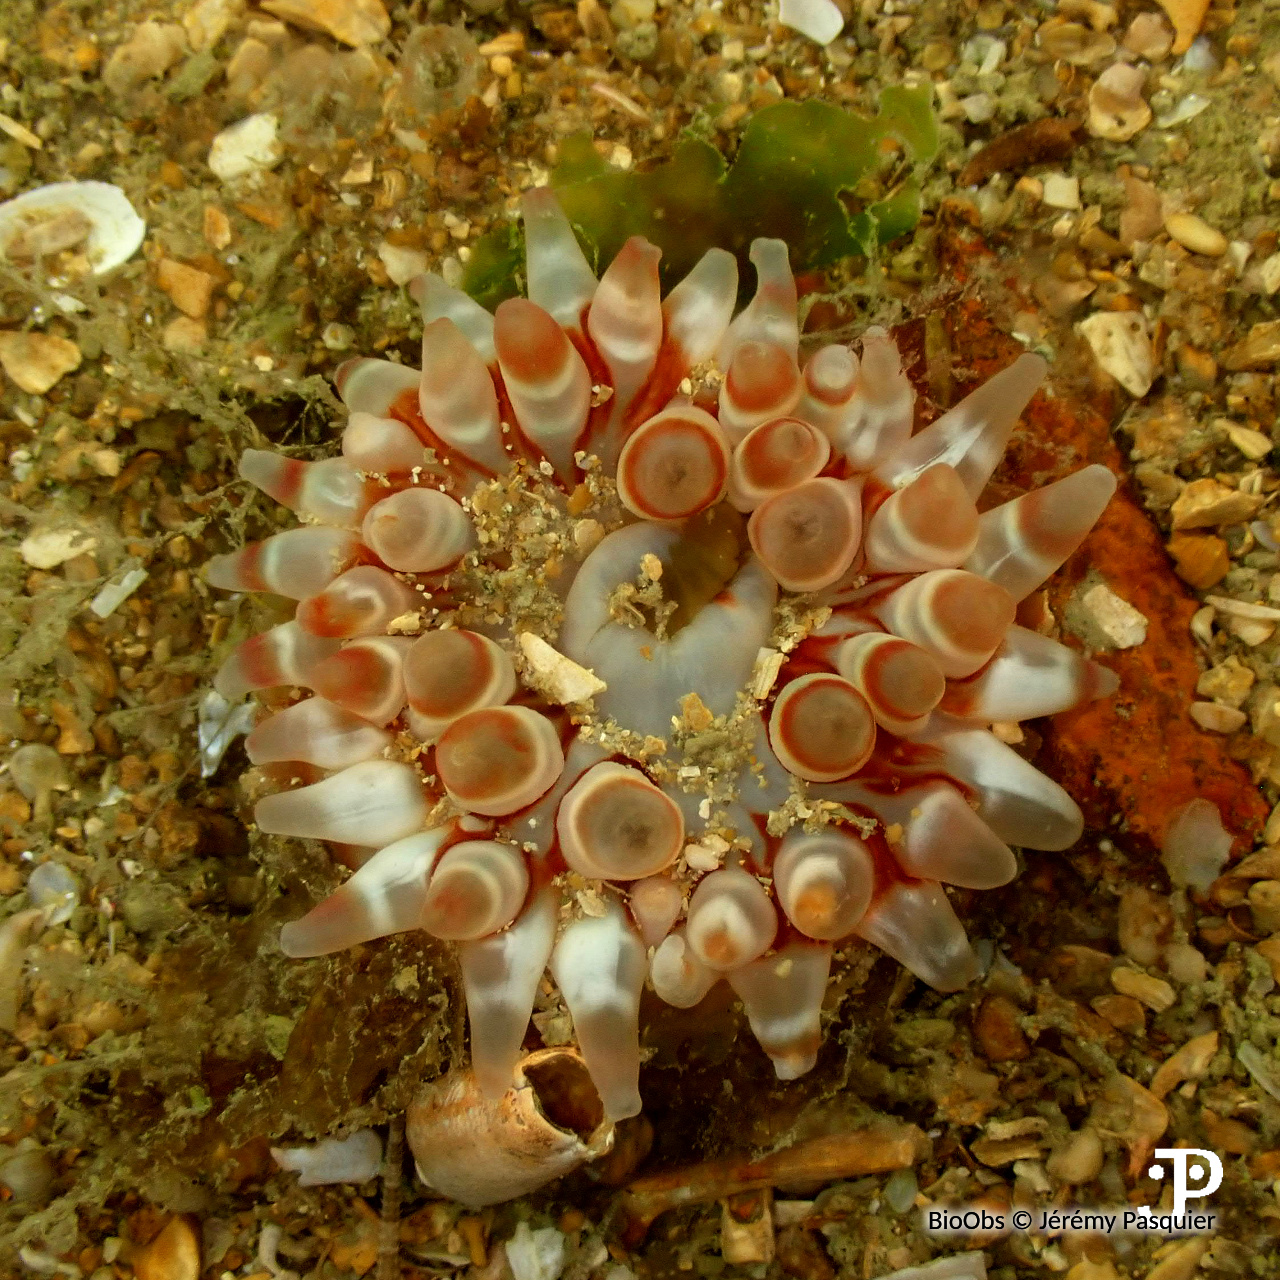 Dahlia de mer - Urticina felina - Jérémy Pasquier - BioObs